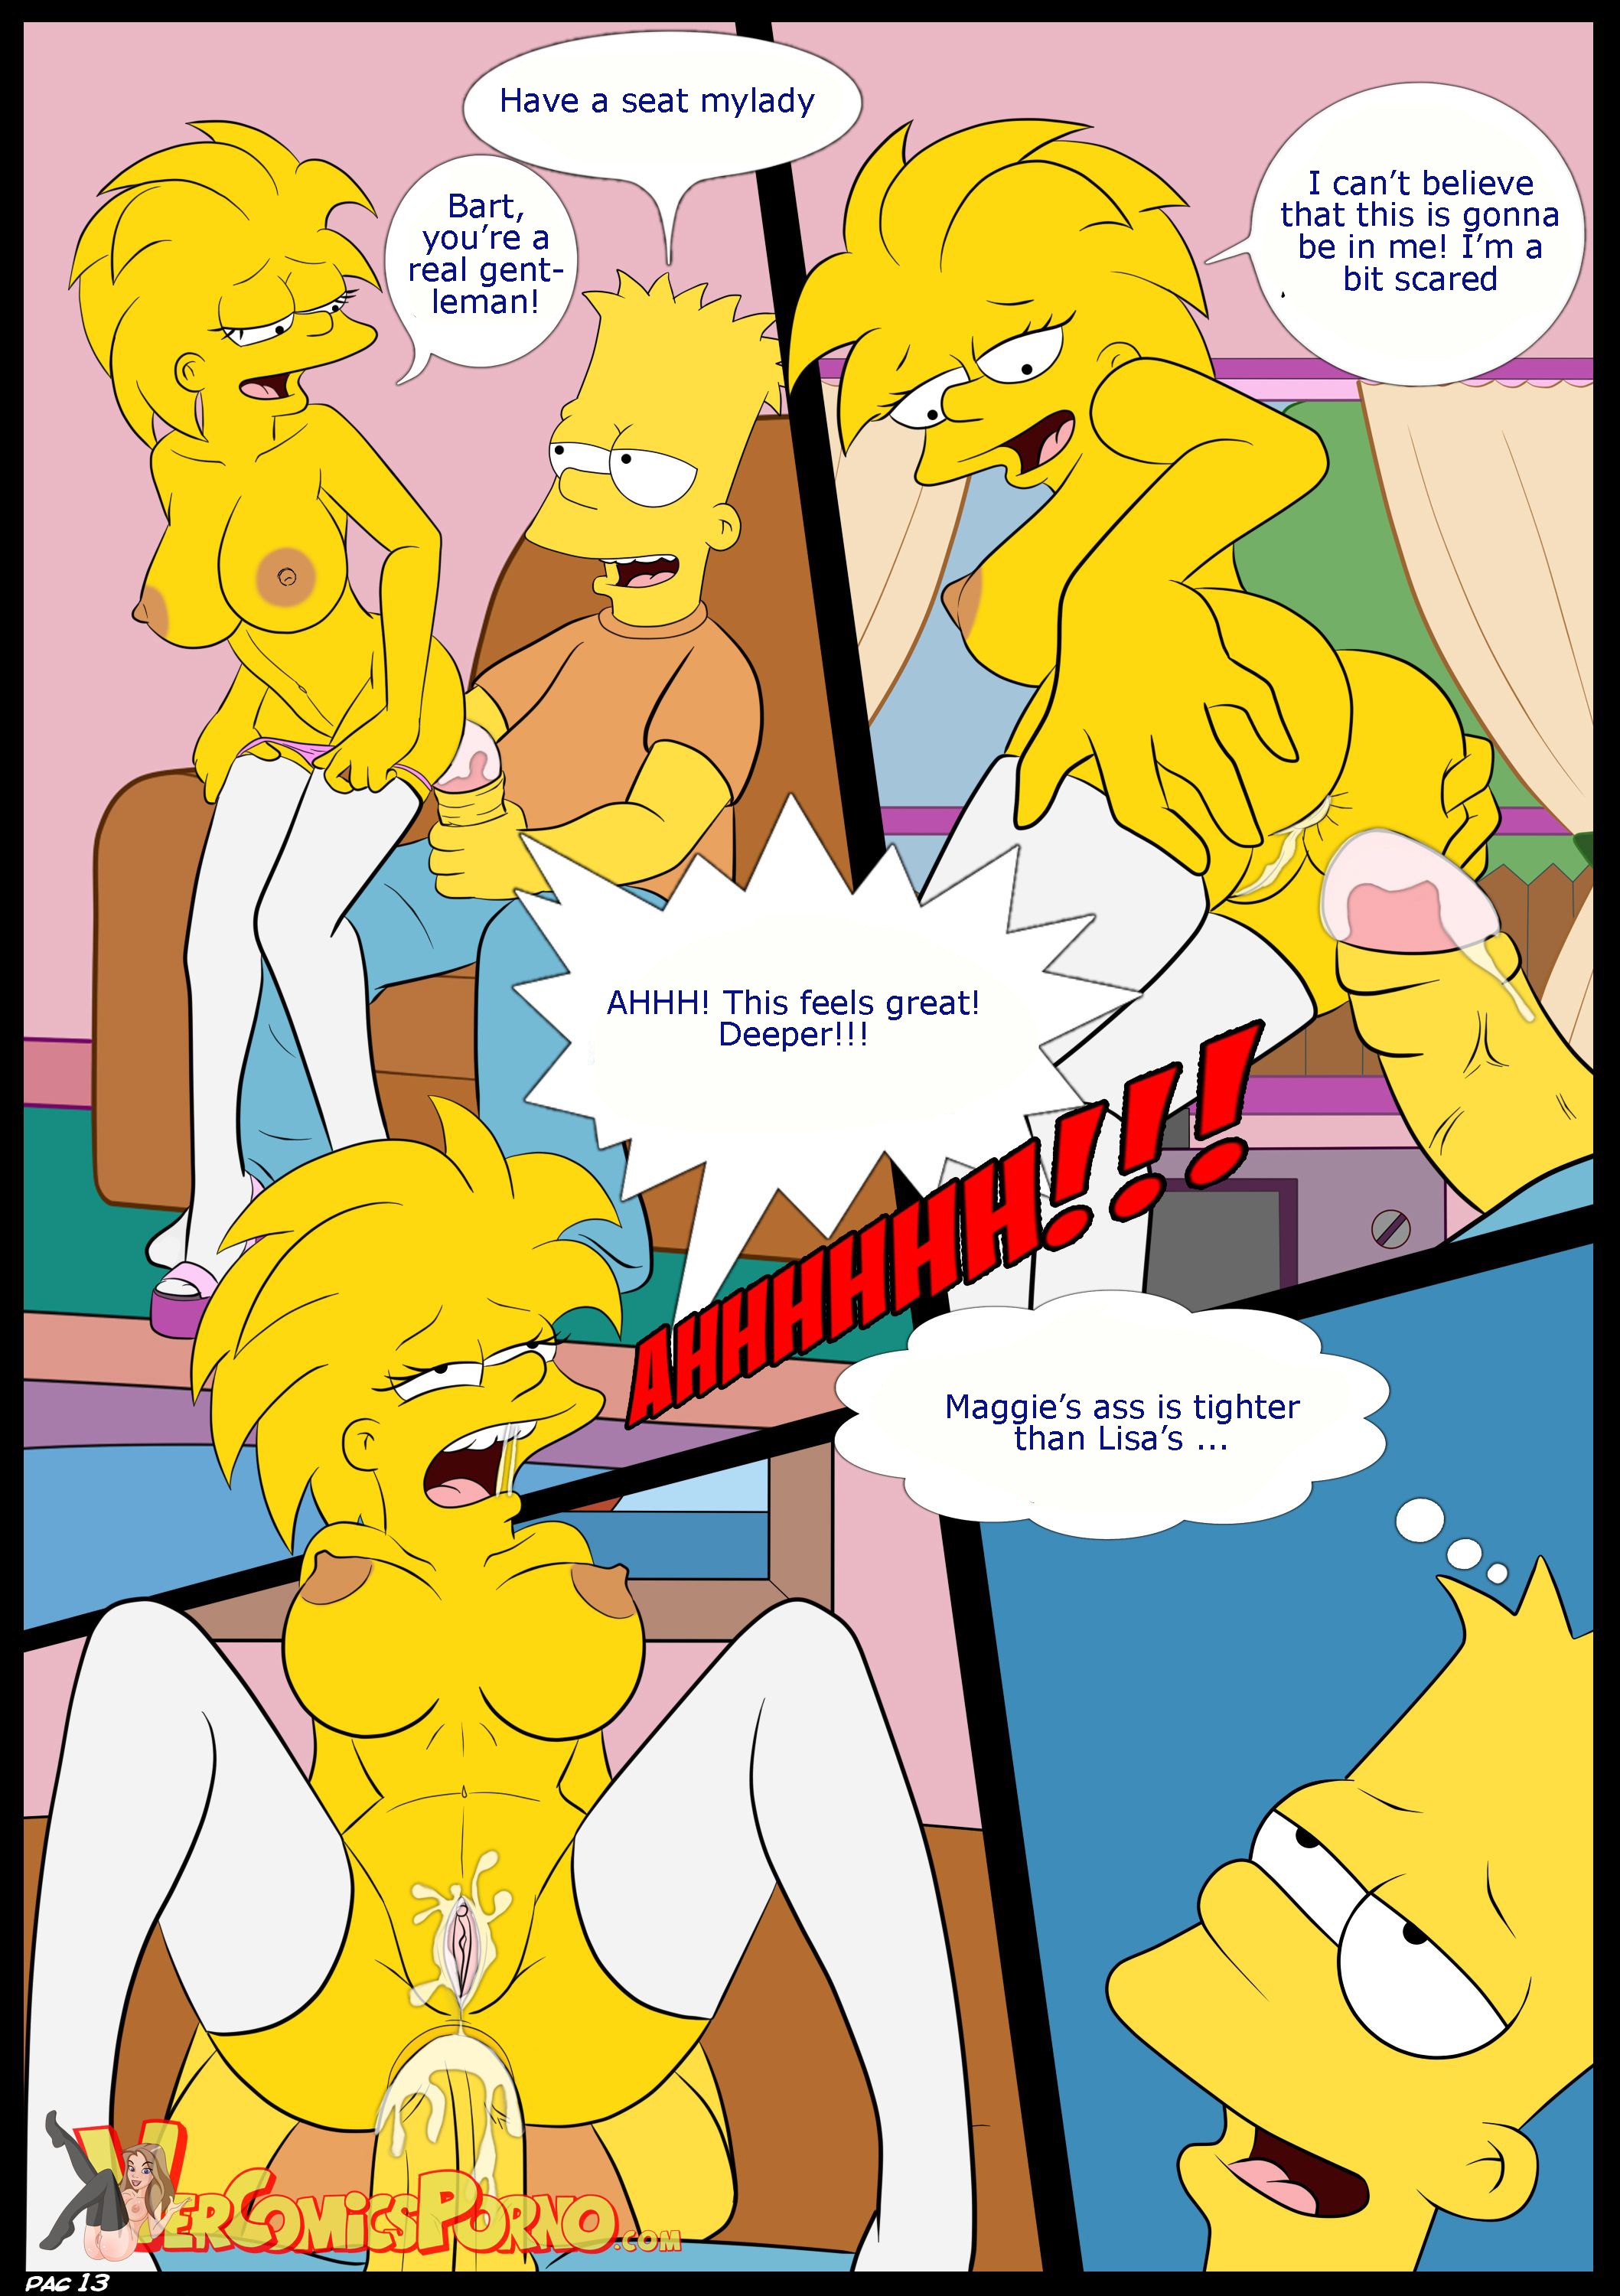 https://hentaiporns.net/wp-content/uploads/2015/11/CROC-Los-Simpsons-Viejas-Costumbres-2-La-Seduccion-The-Simpsons-English-julle13.jpg